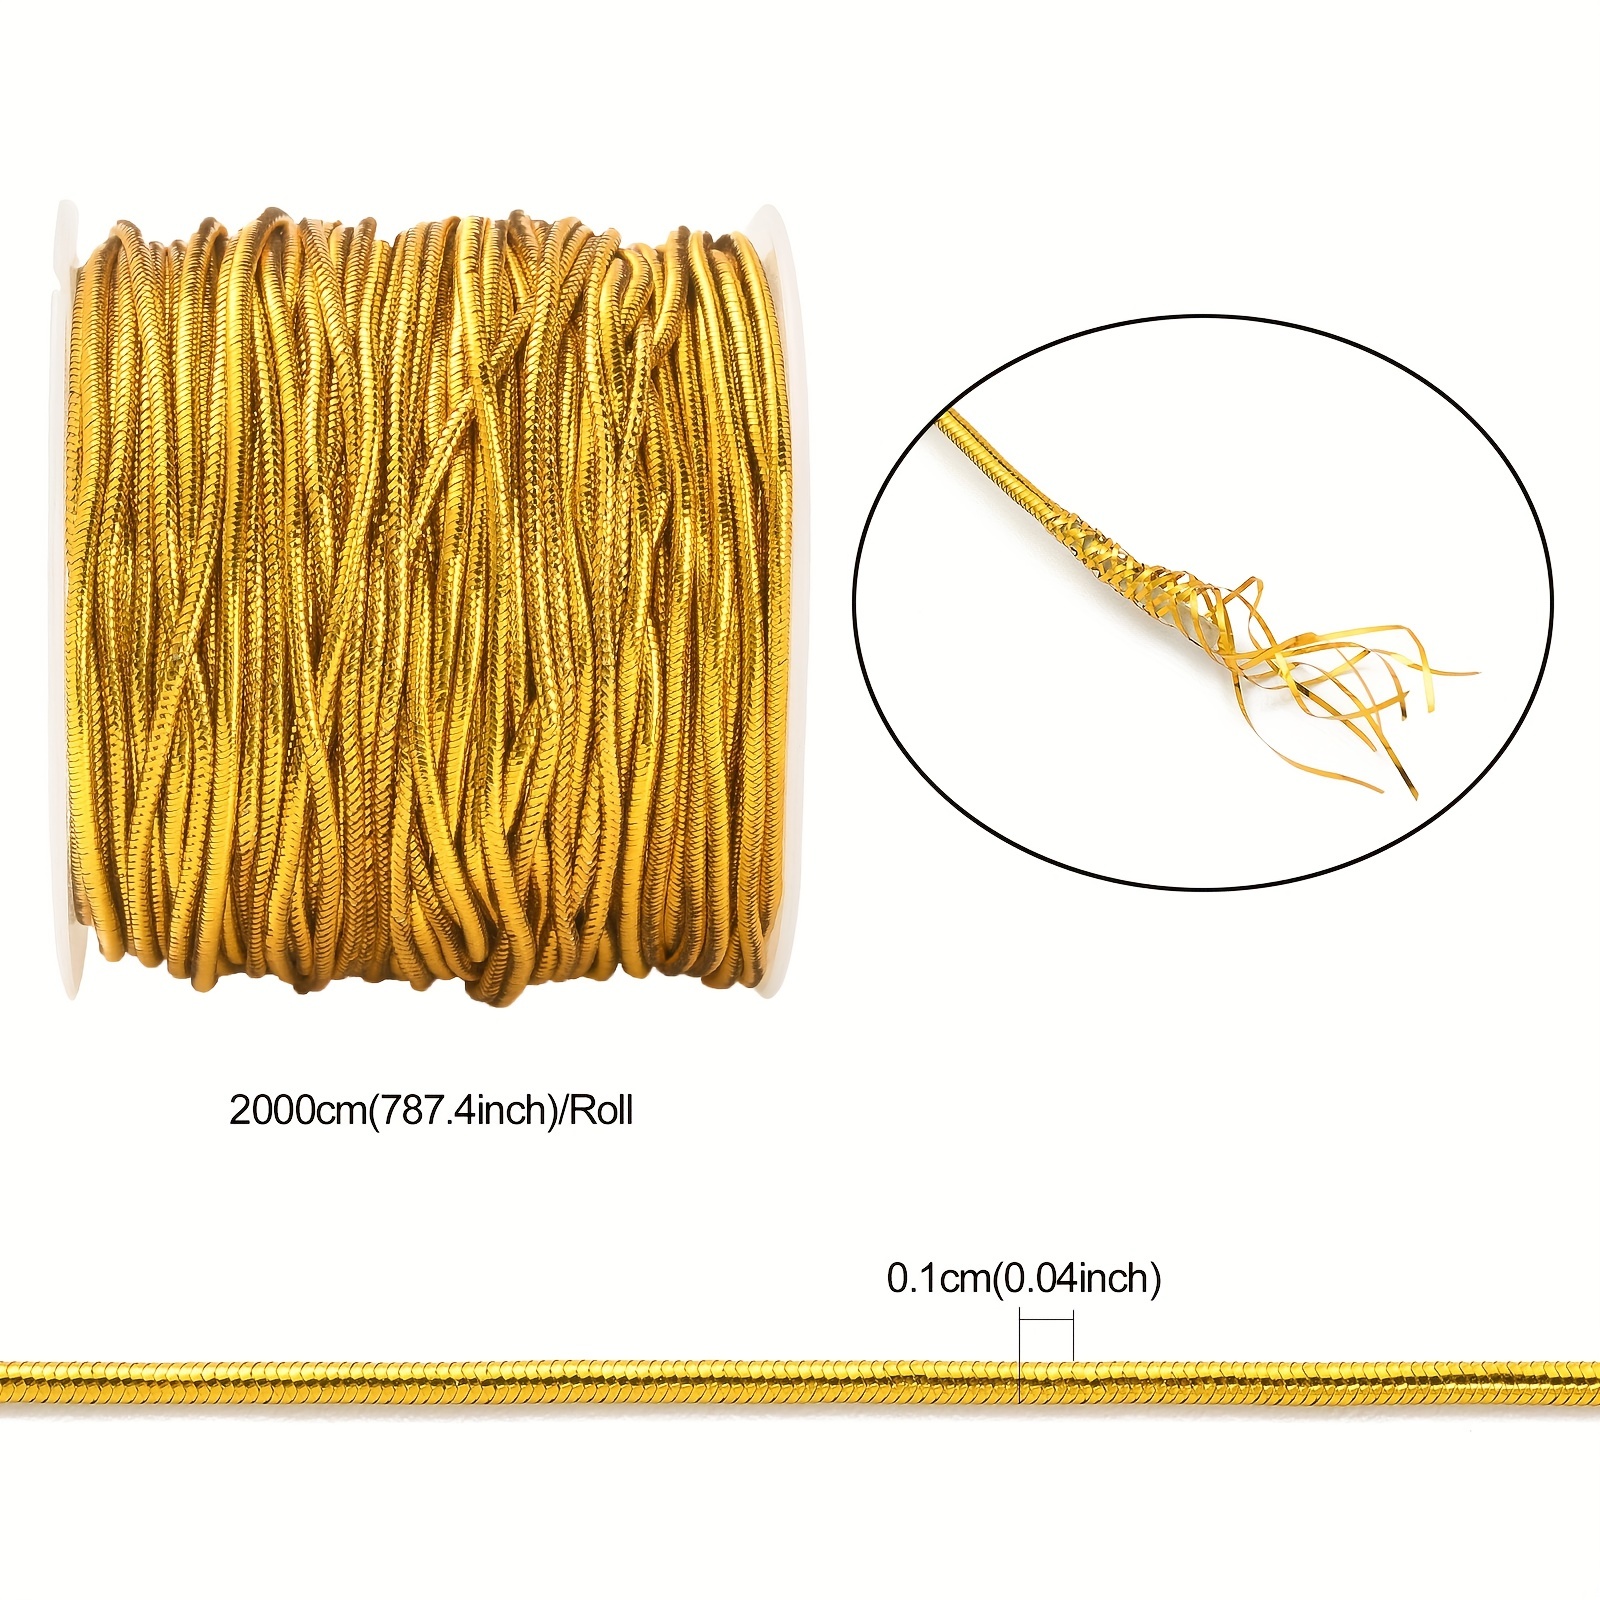 10 Yards Gold Metallic Twisted Cord, 1mm Cord 